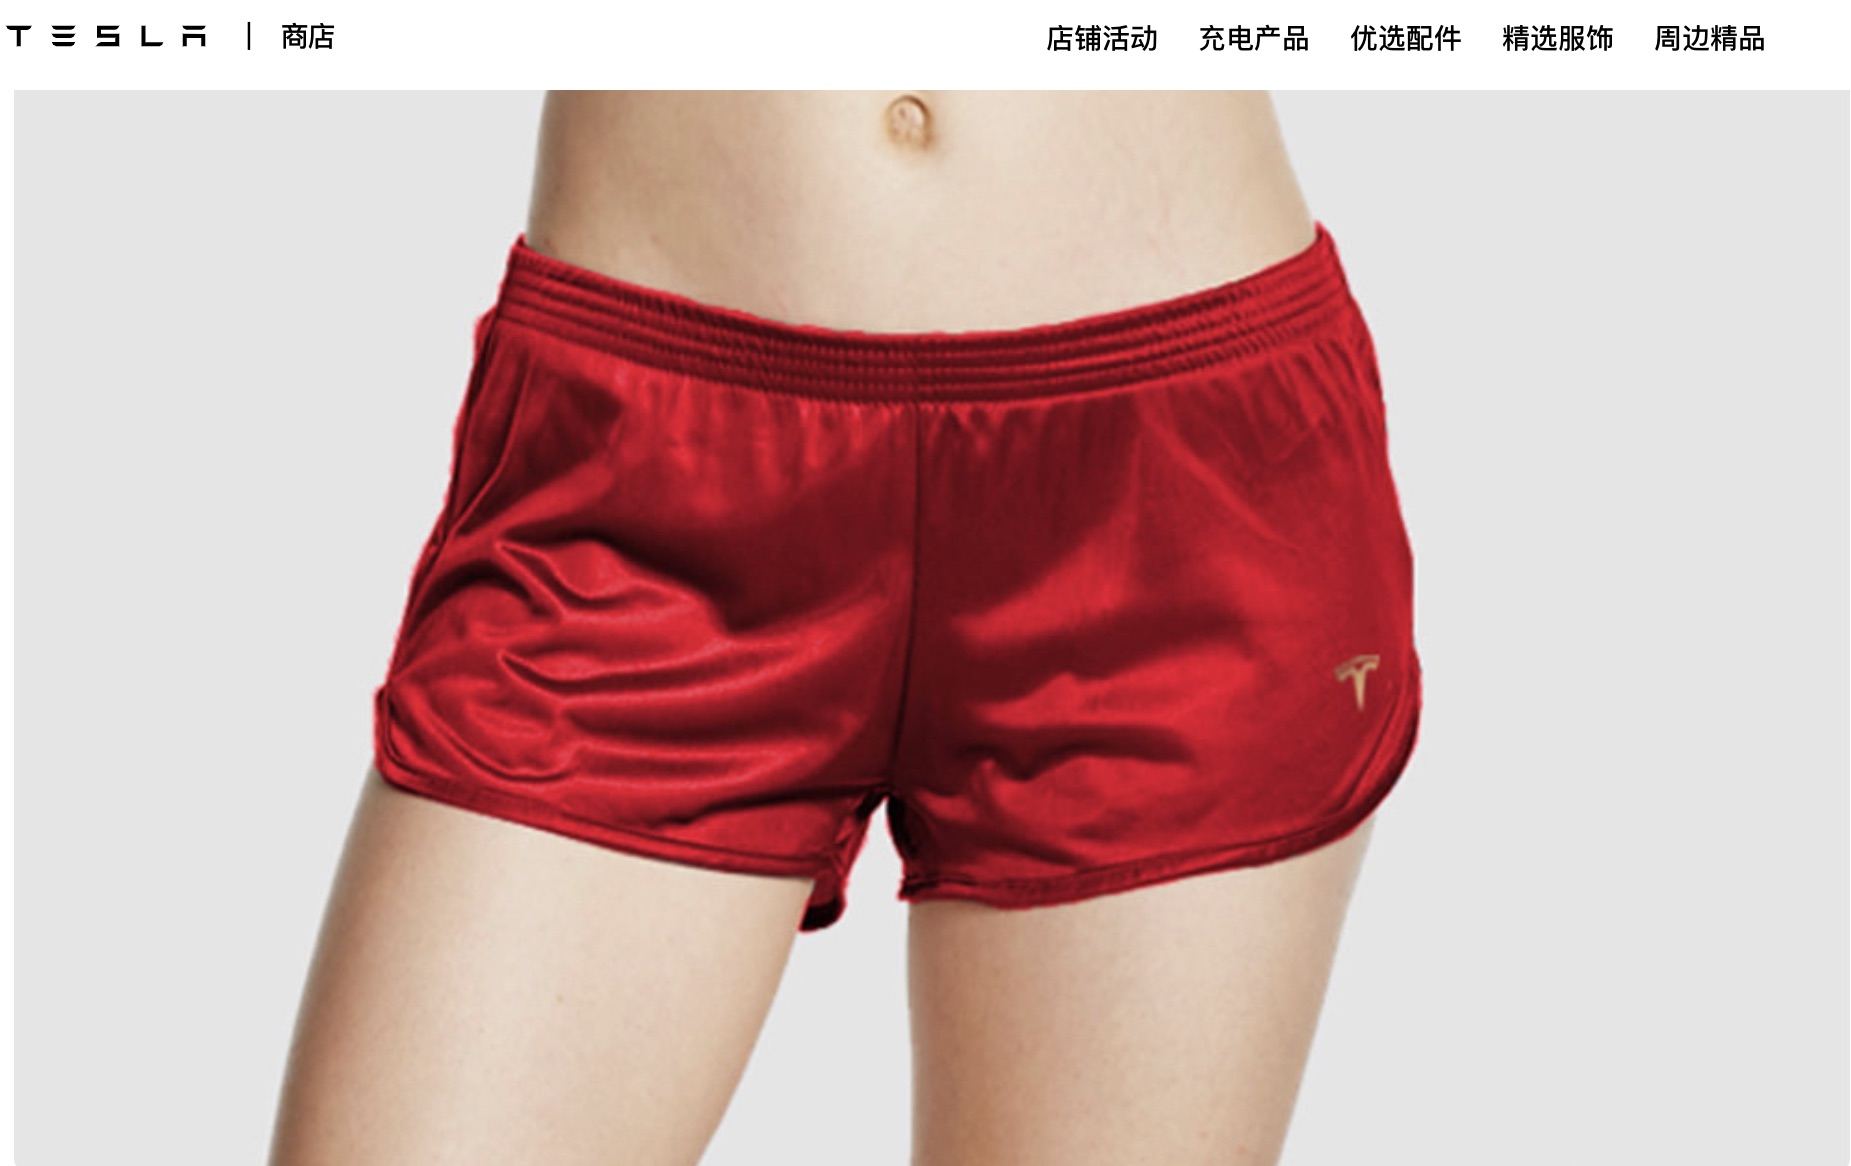 tesla-China-short-shorts-S3XY